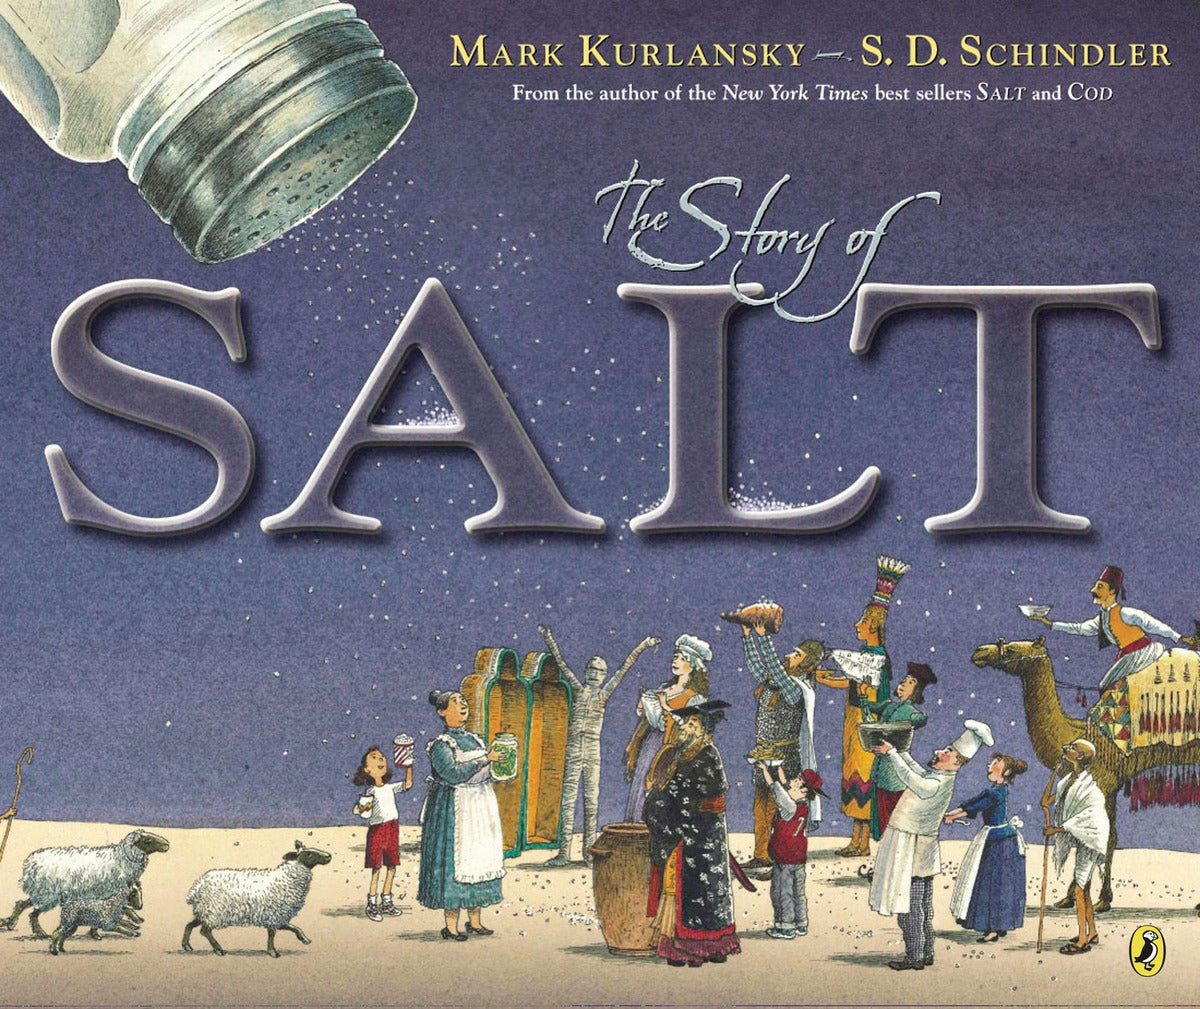 Story of Salt, The